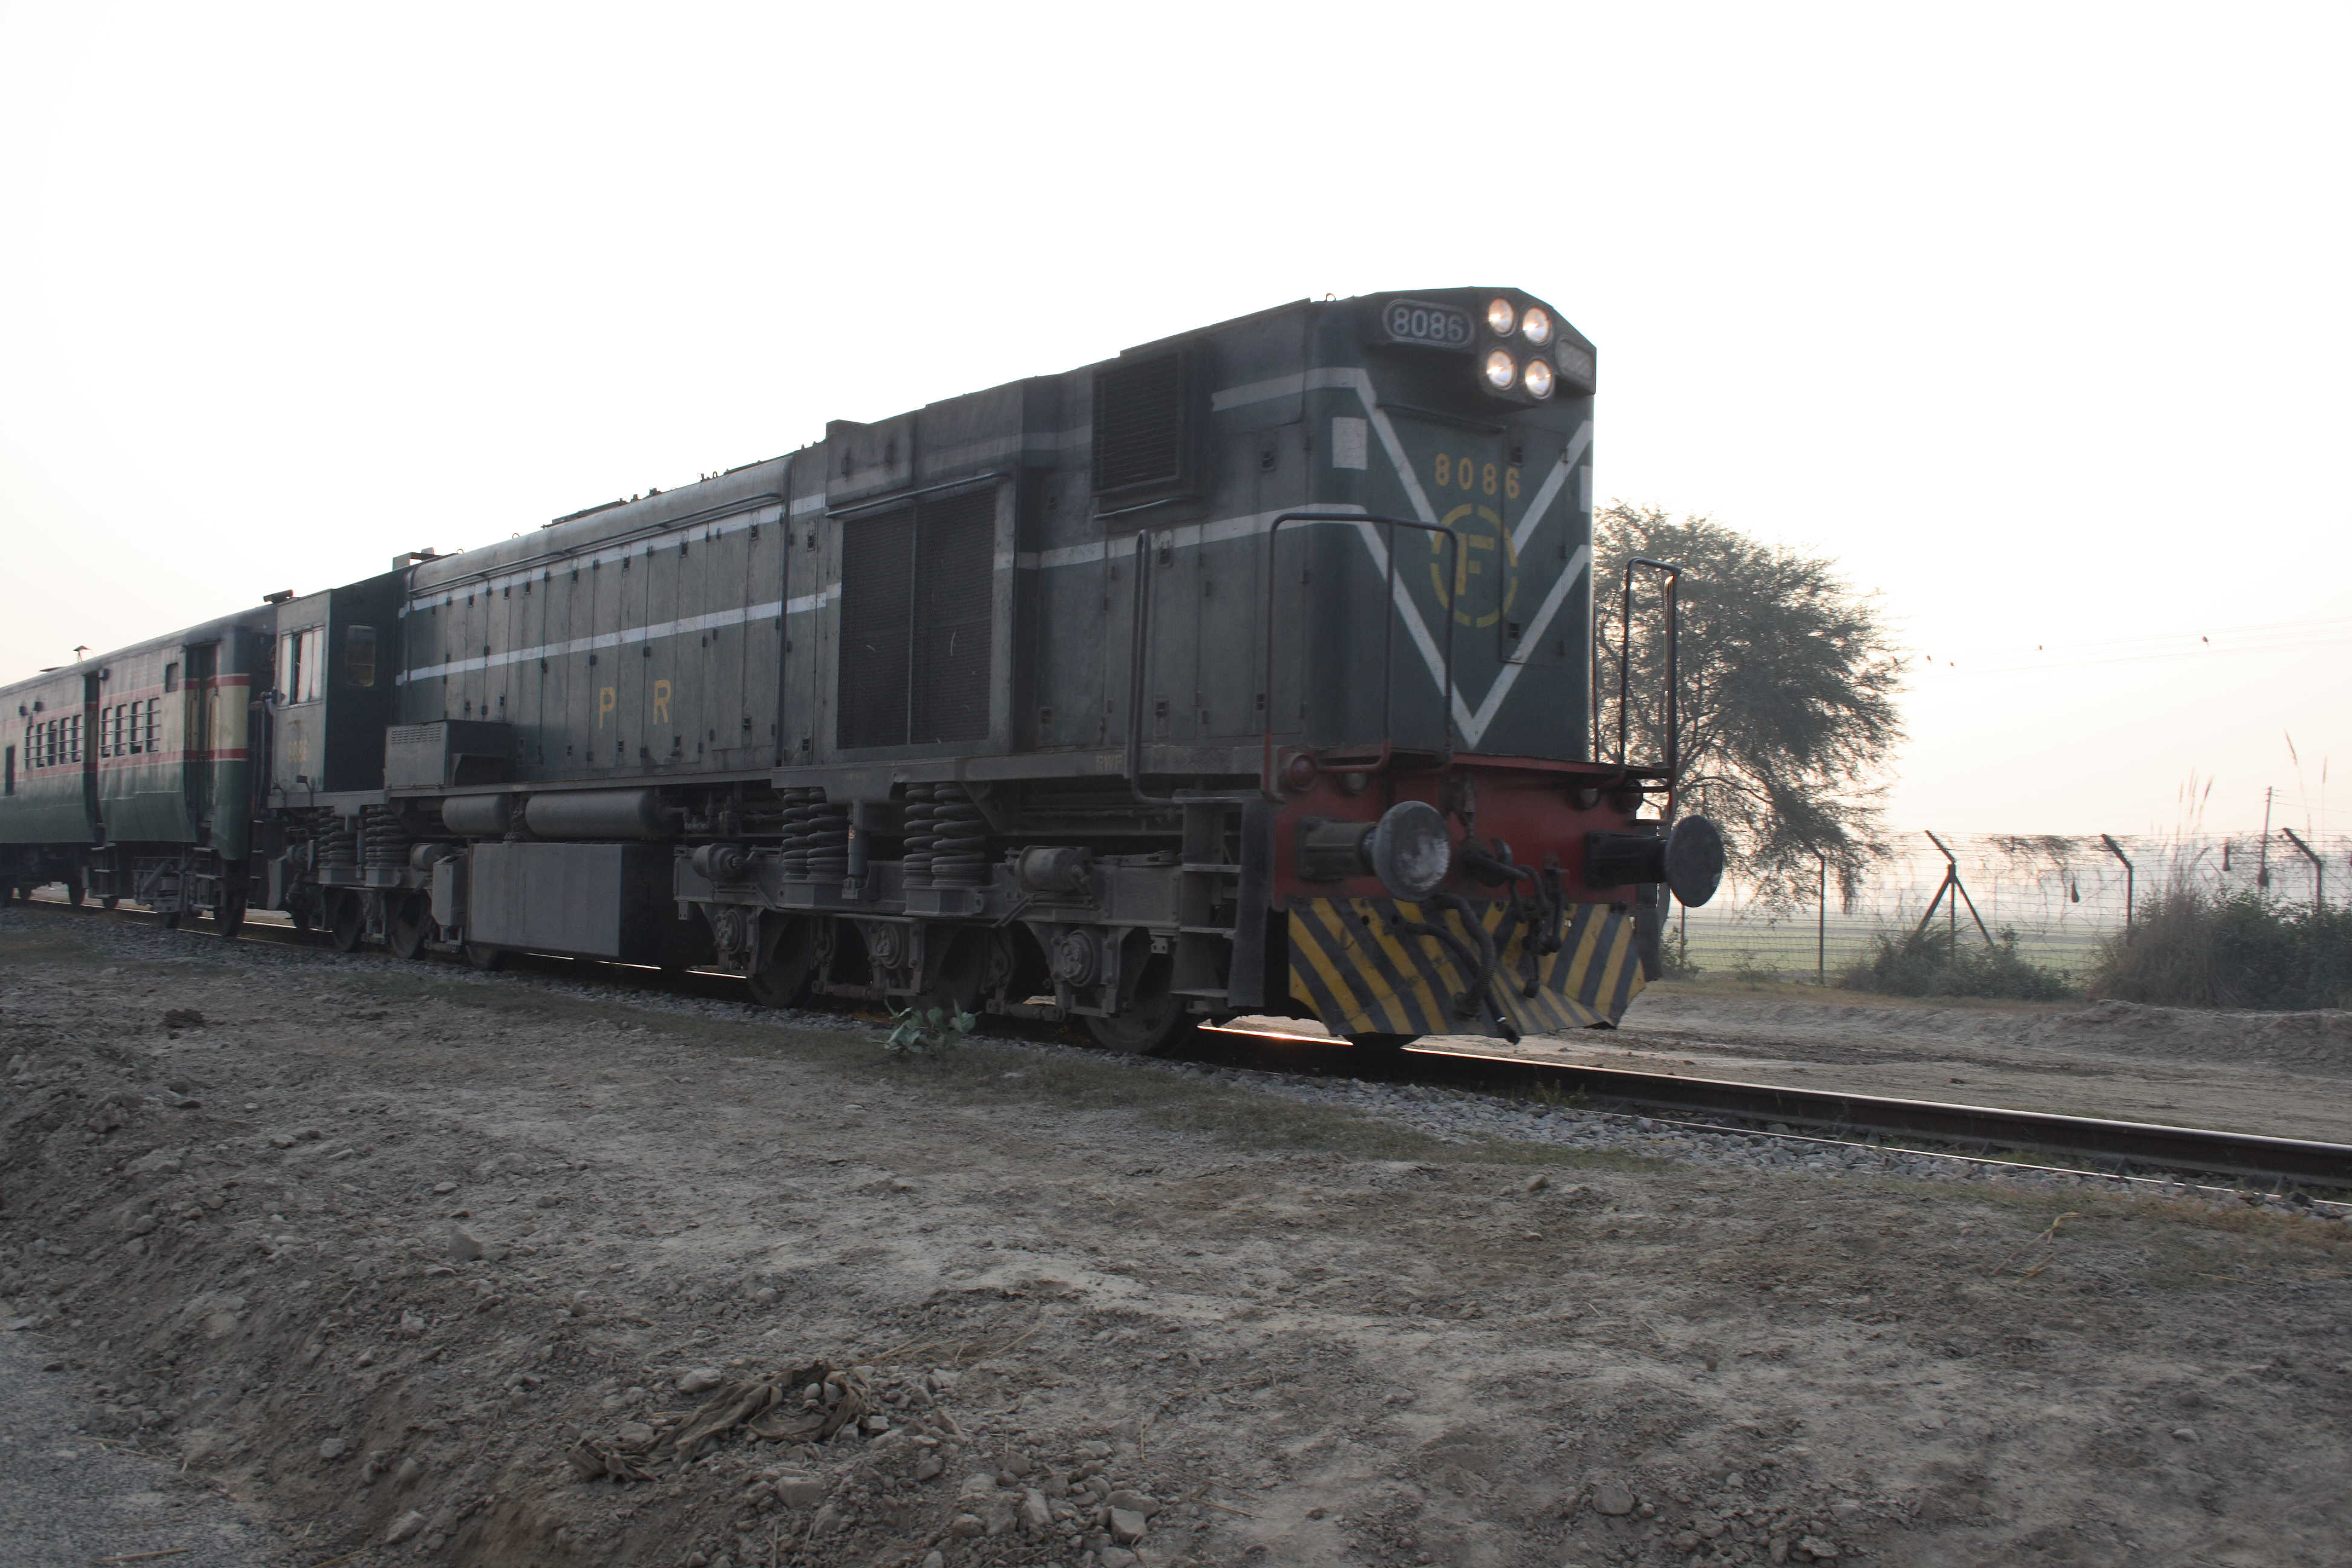 India asks Pakistan to return its rake used in Samjhauta Express